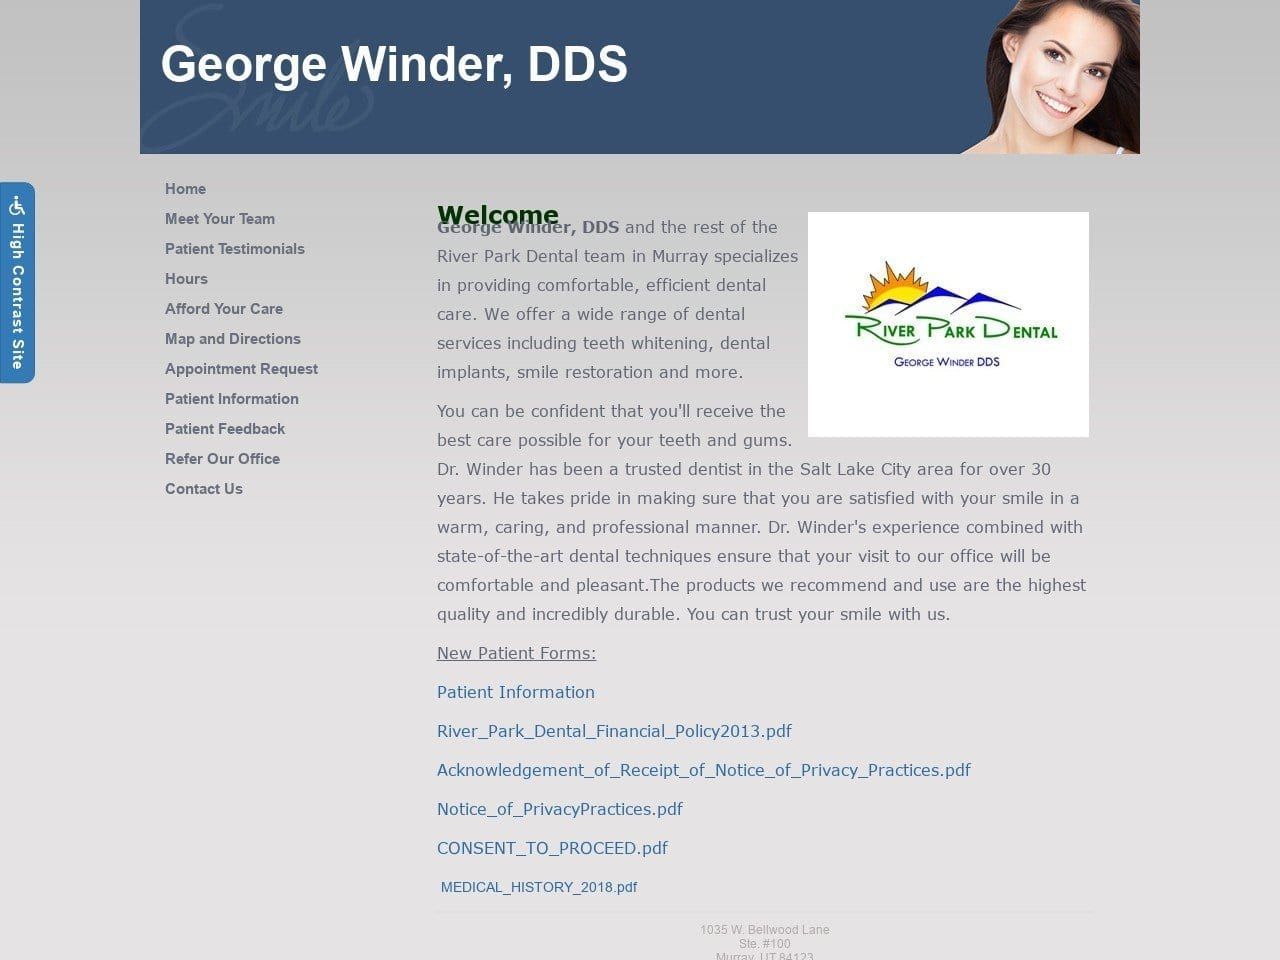 Dr. George Winder DDS Website Screenshot from georgewinderdds.com